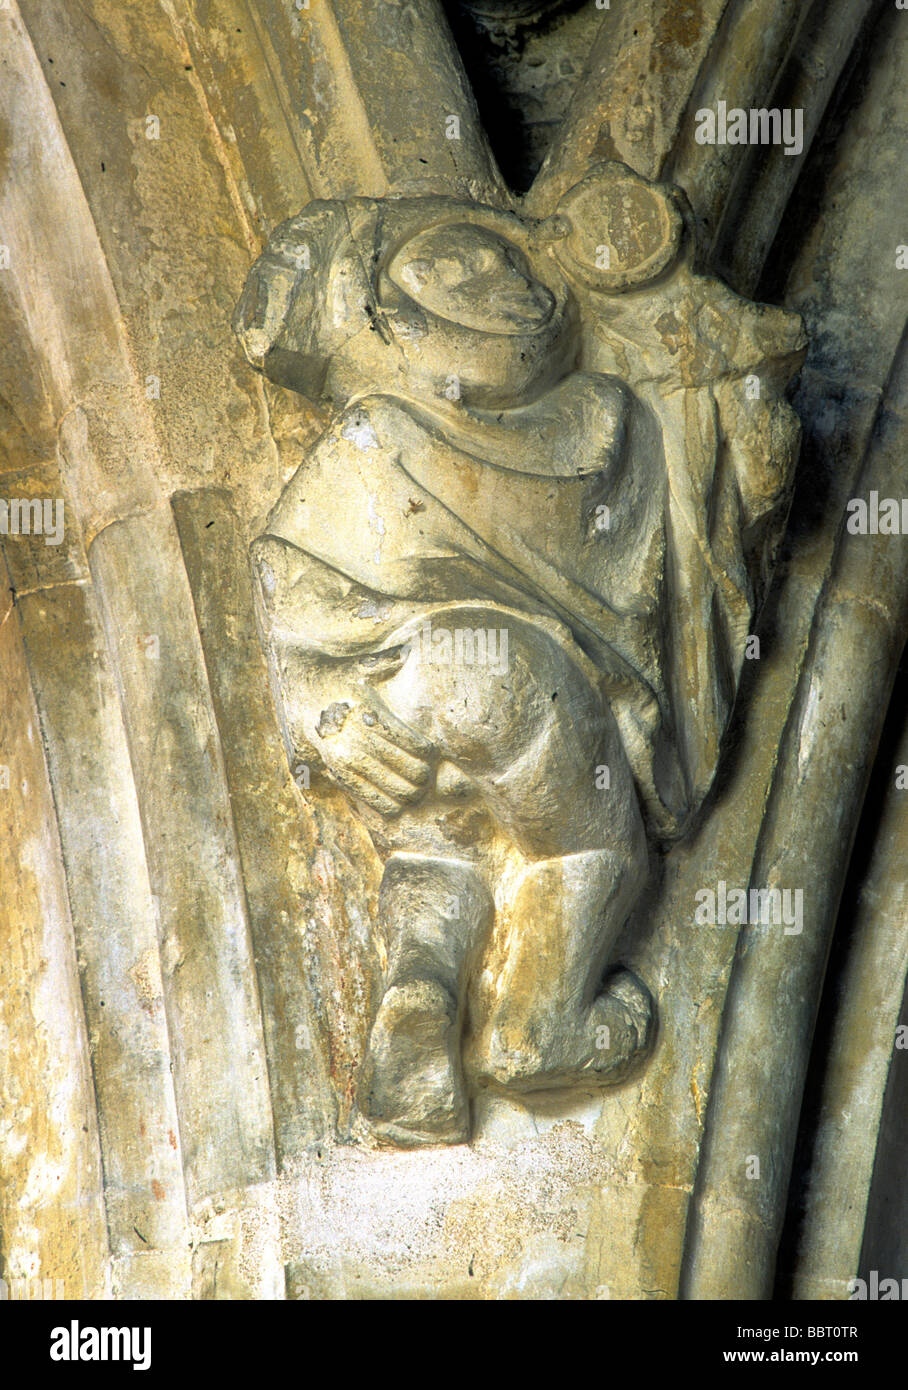 Man baring buttocks stone corbel Cley next the Sea church interior Norfolk East Anglia England UK English carving Stock Photo